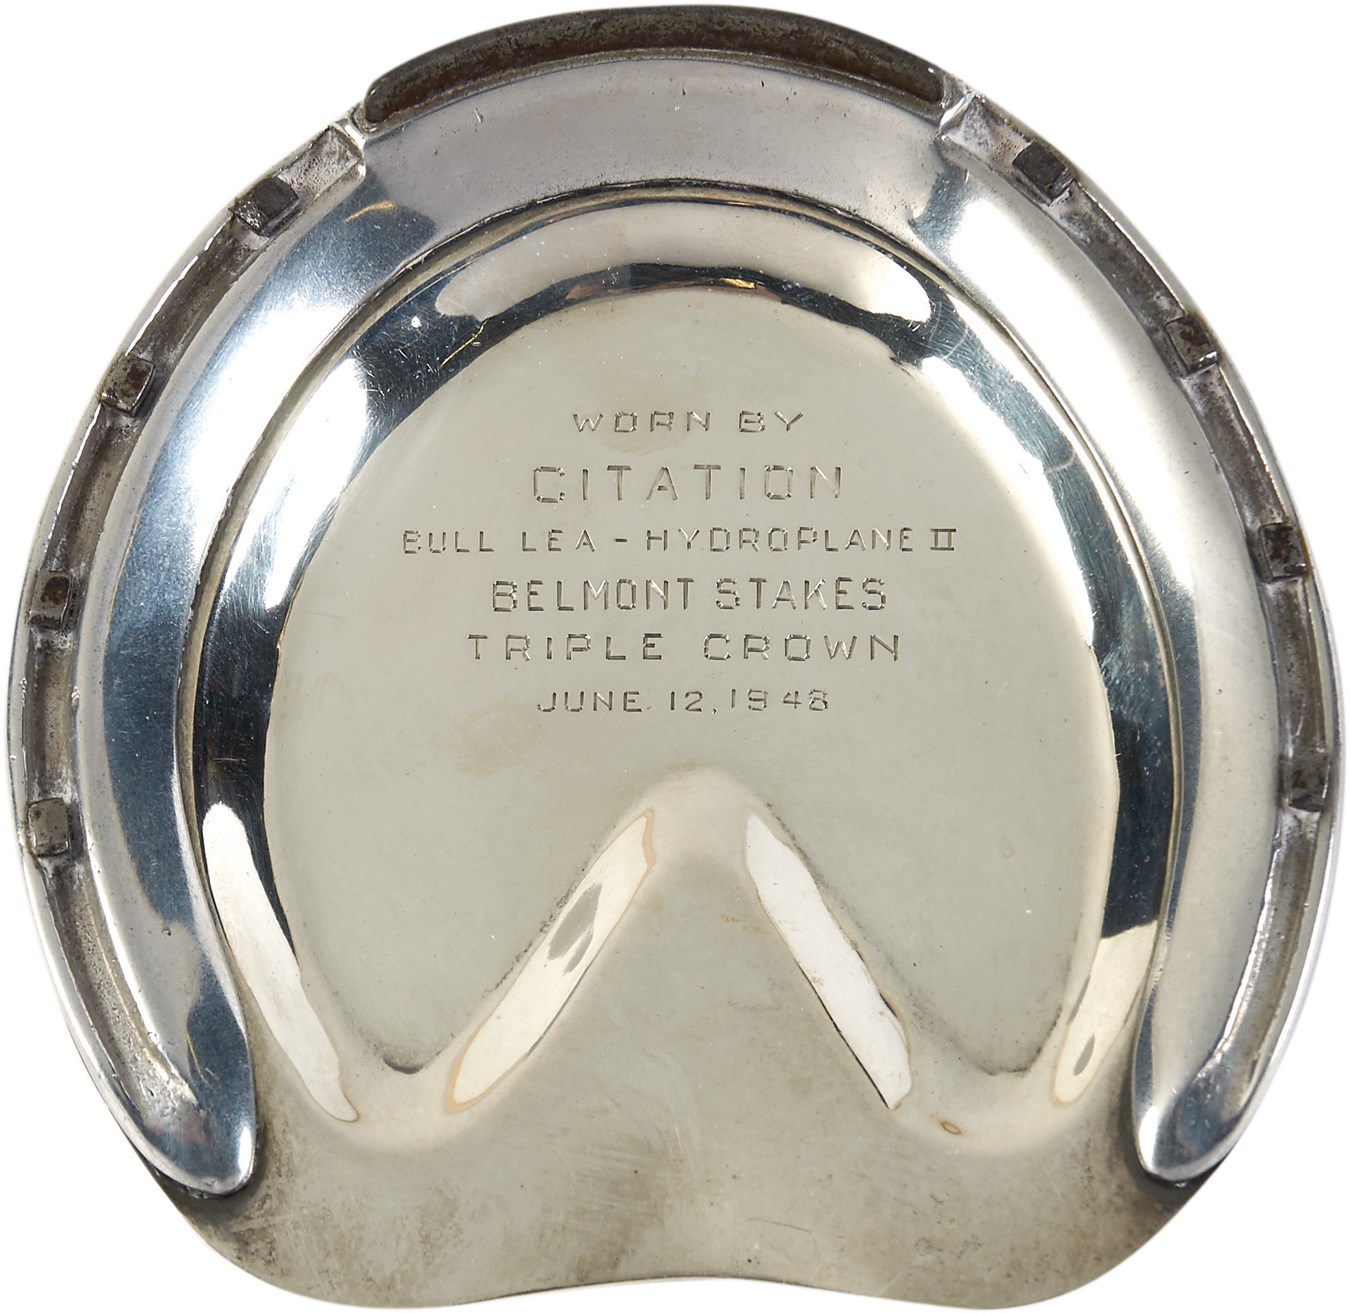 - "Citation" 1948 Belmont Stakes Winning Triple Crown Horseshoe